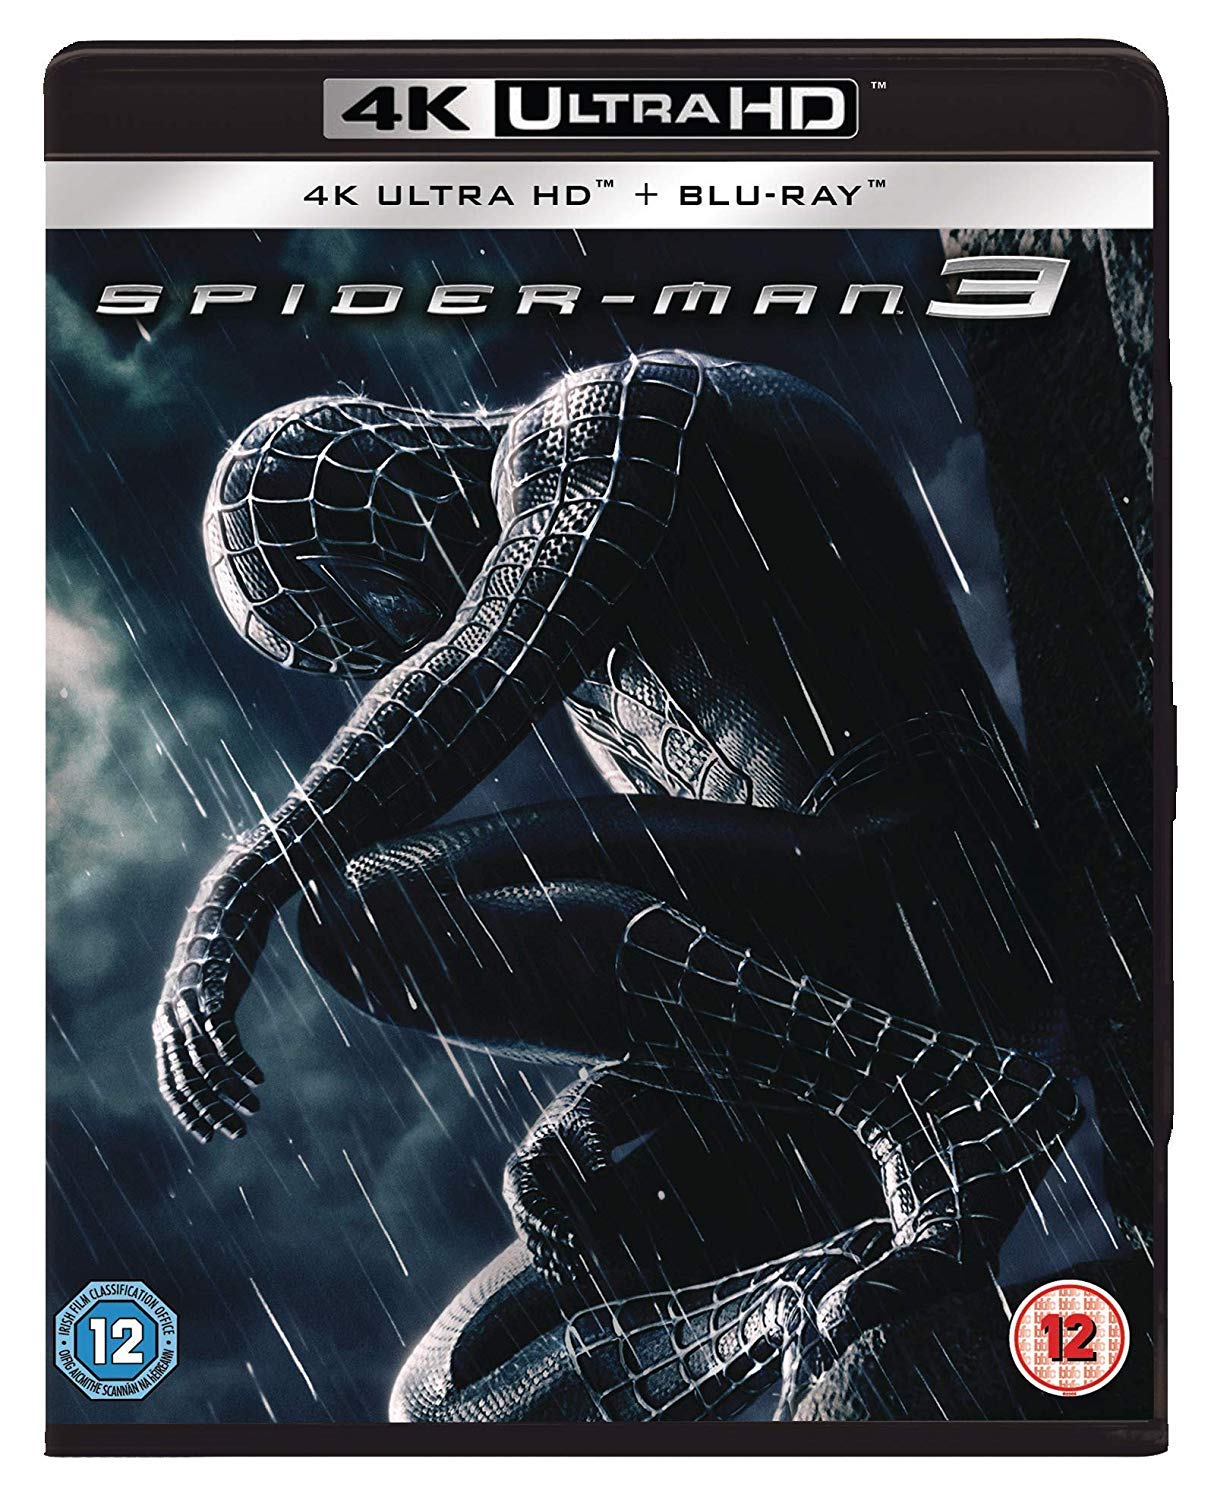 Spider-Man 3 [4K Ultra-HD + Blu-Ray] [UK Import]